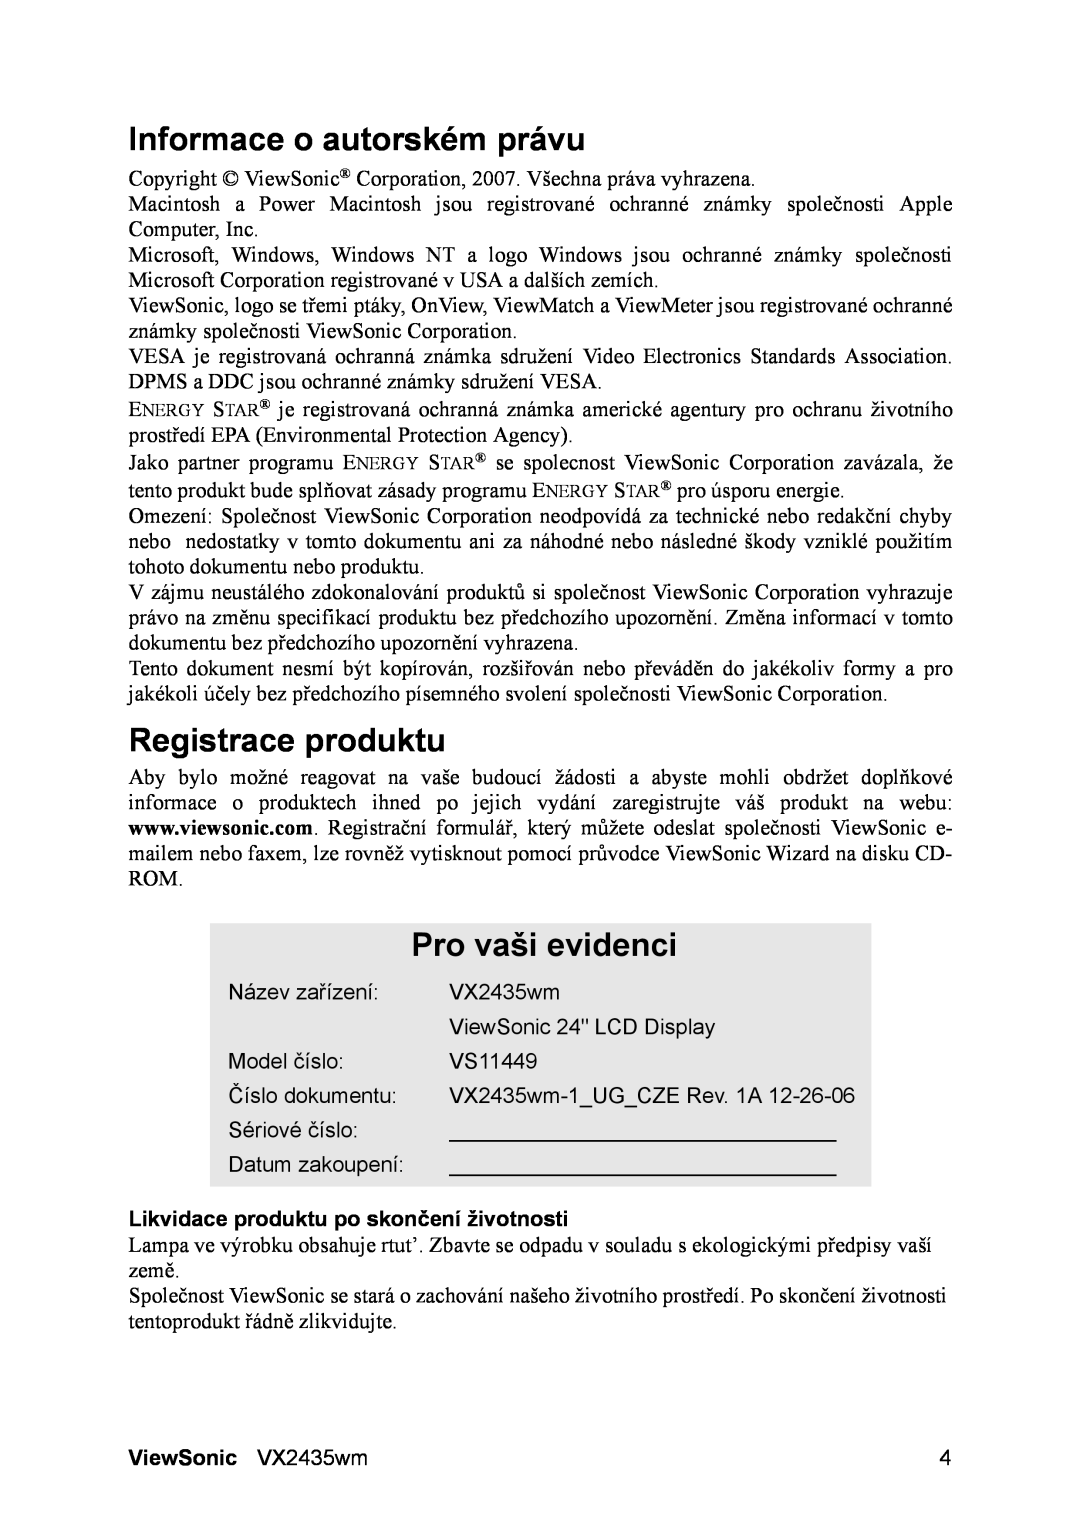 ViewSonic VS11449 manual Informace o autorském právu, Registrace produktu, Pro vaši evidenci, ViewSonic VX2435wm 